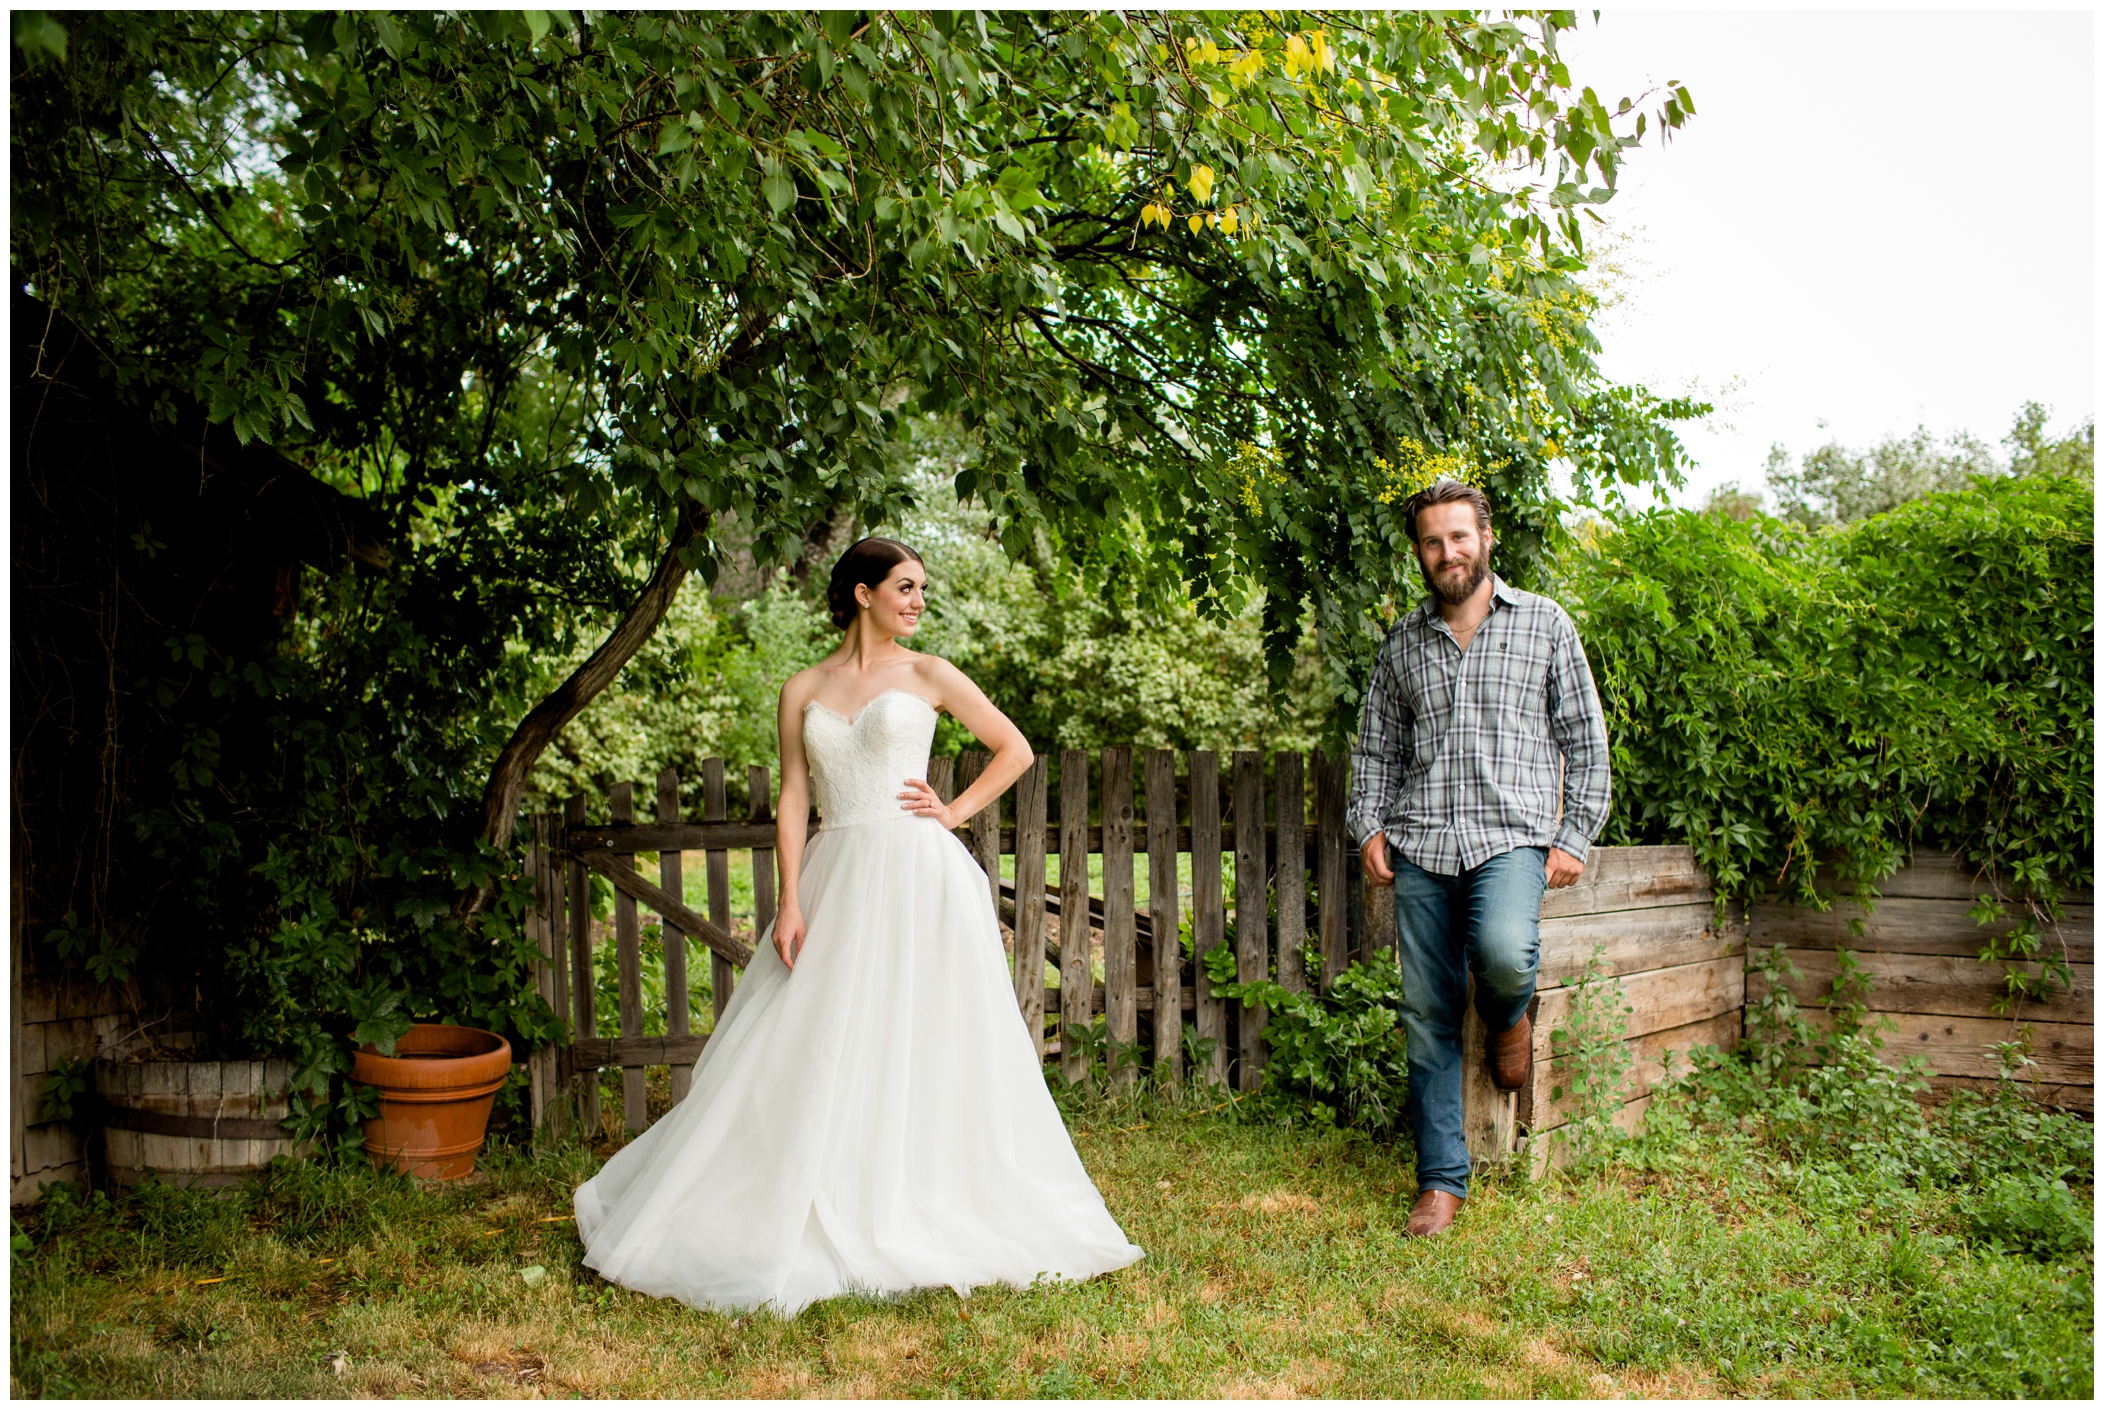 Longmont wedding photography at Lone Hawk Farm by Plum Pretty Photography.